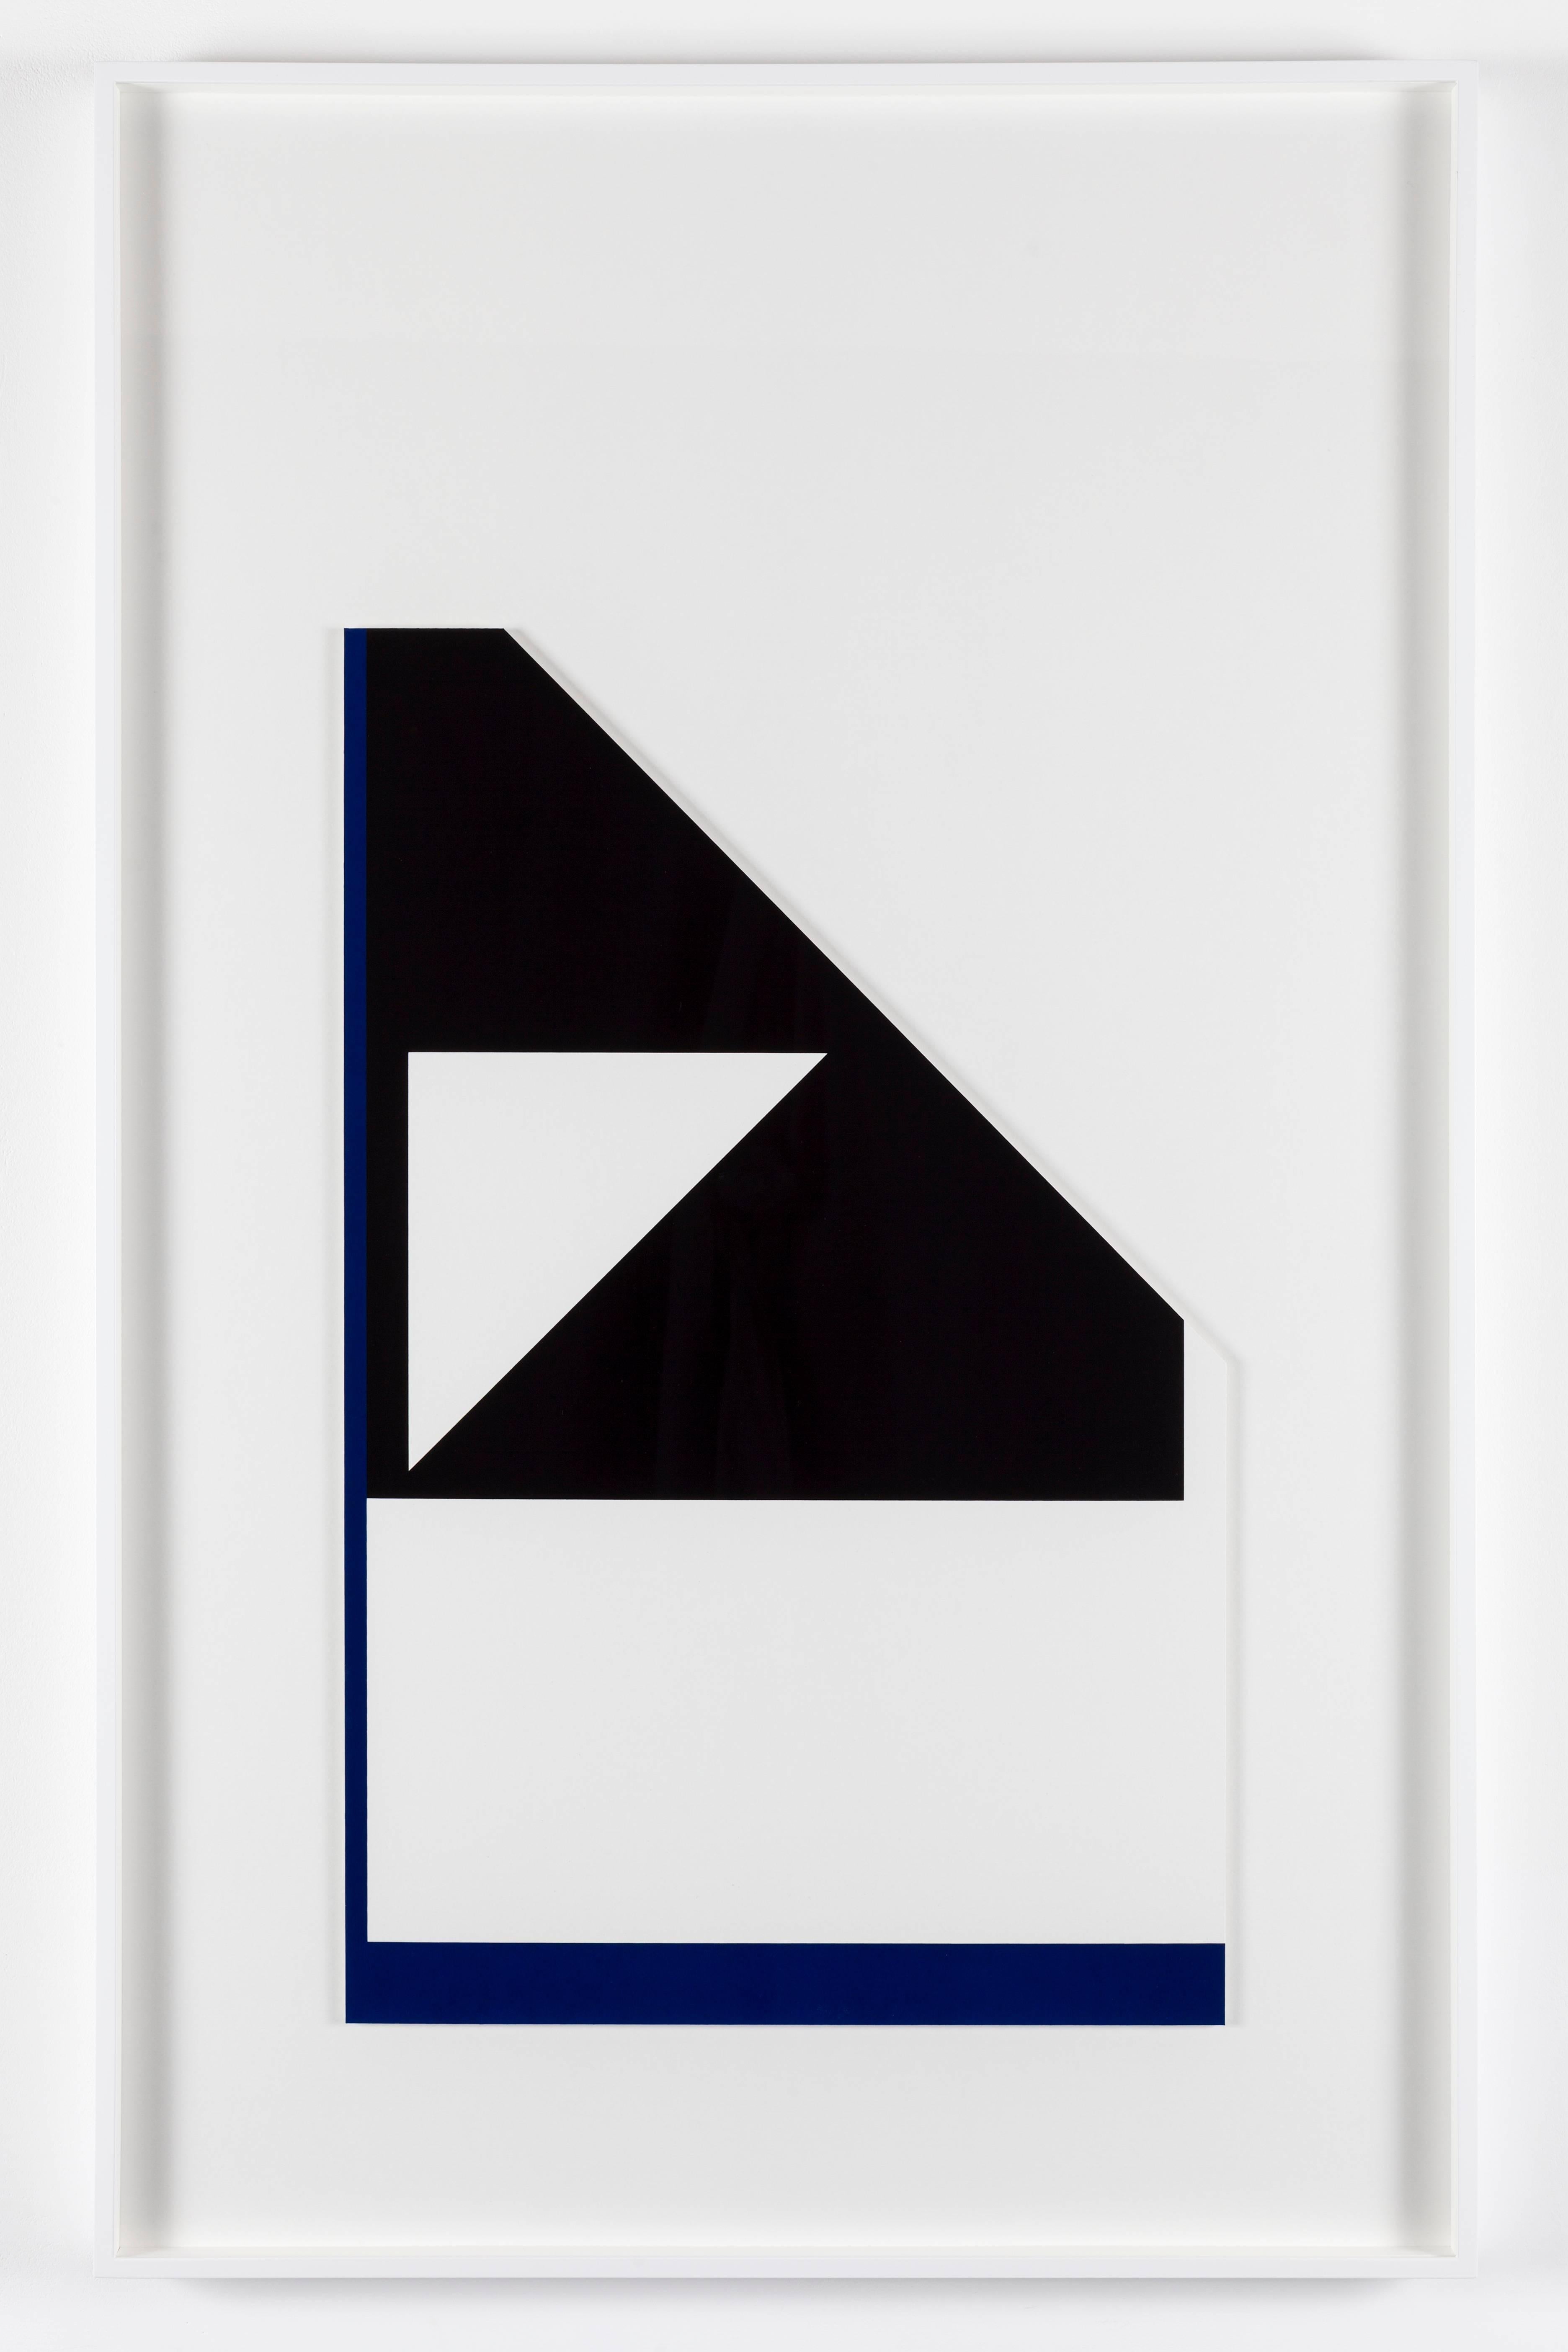 Peter Saville Abstract Print - ‘Diagonal reflex edge��’ (from the ‘metalanguage’ series)